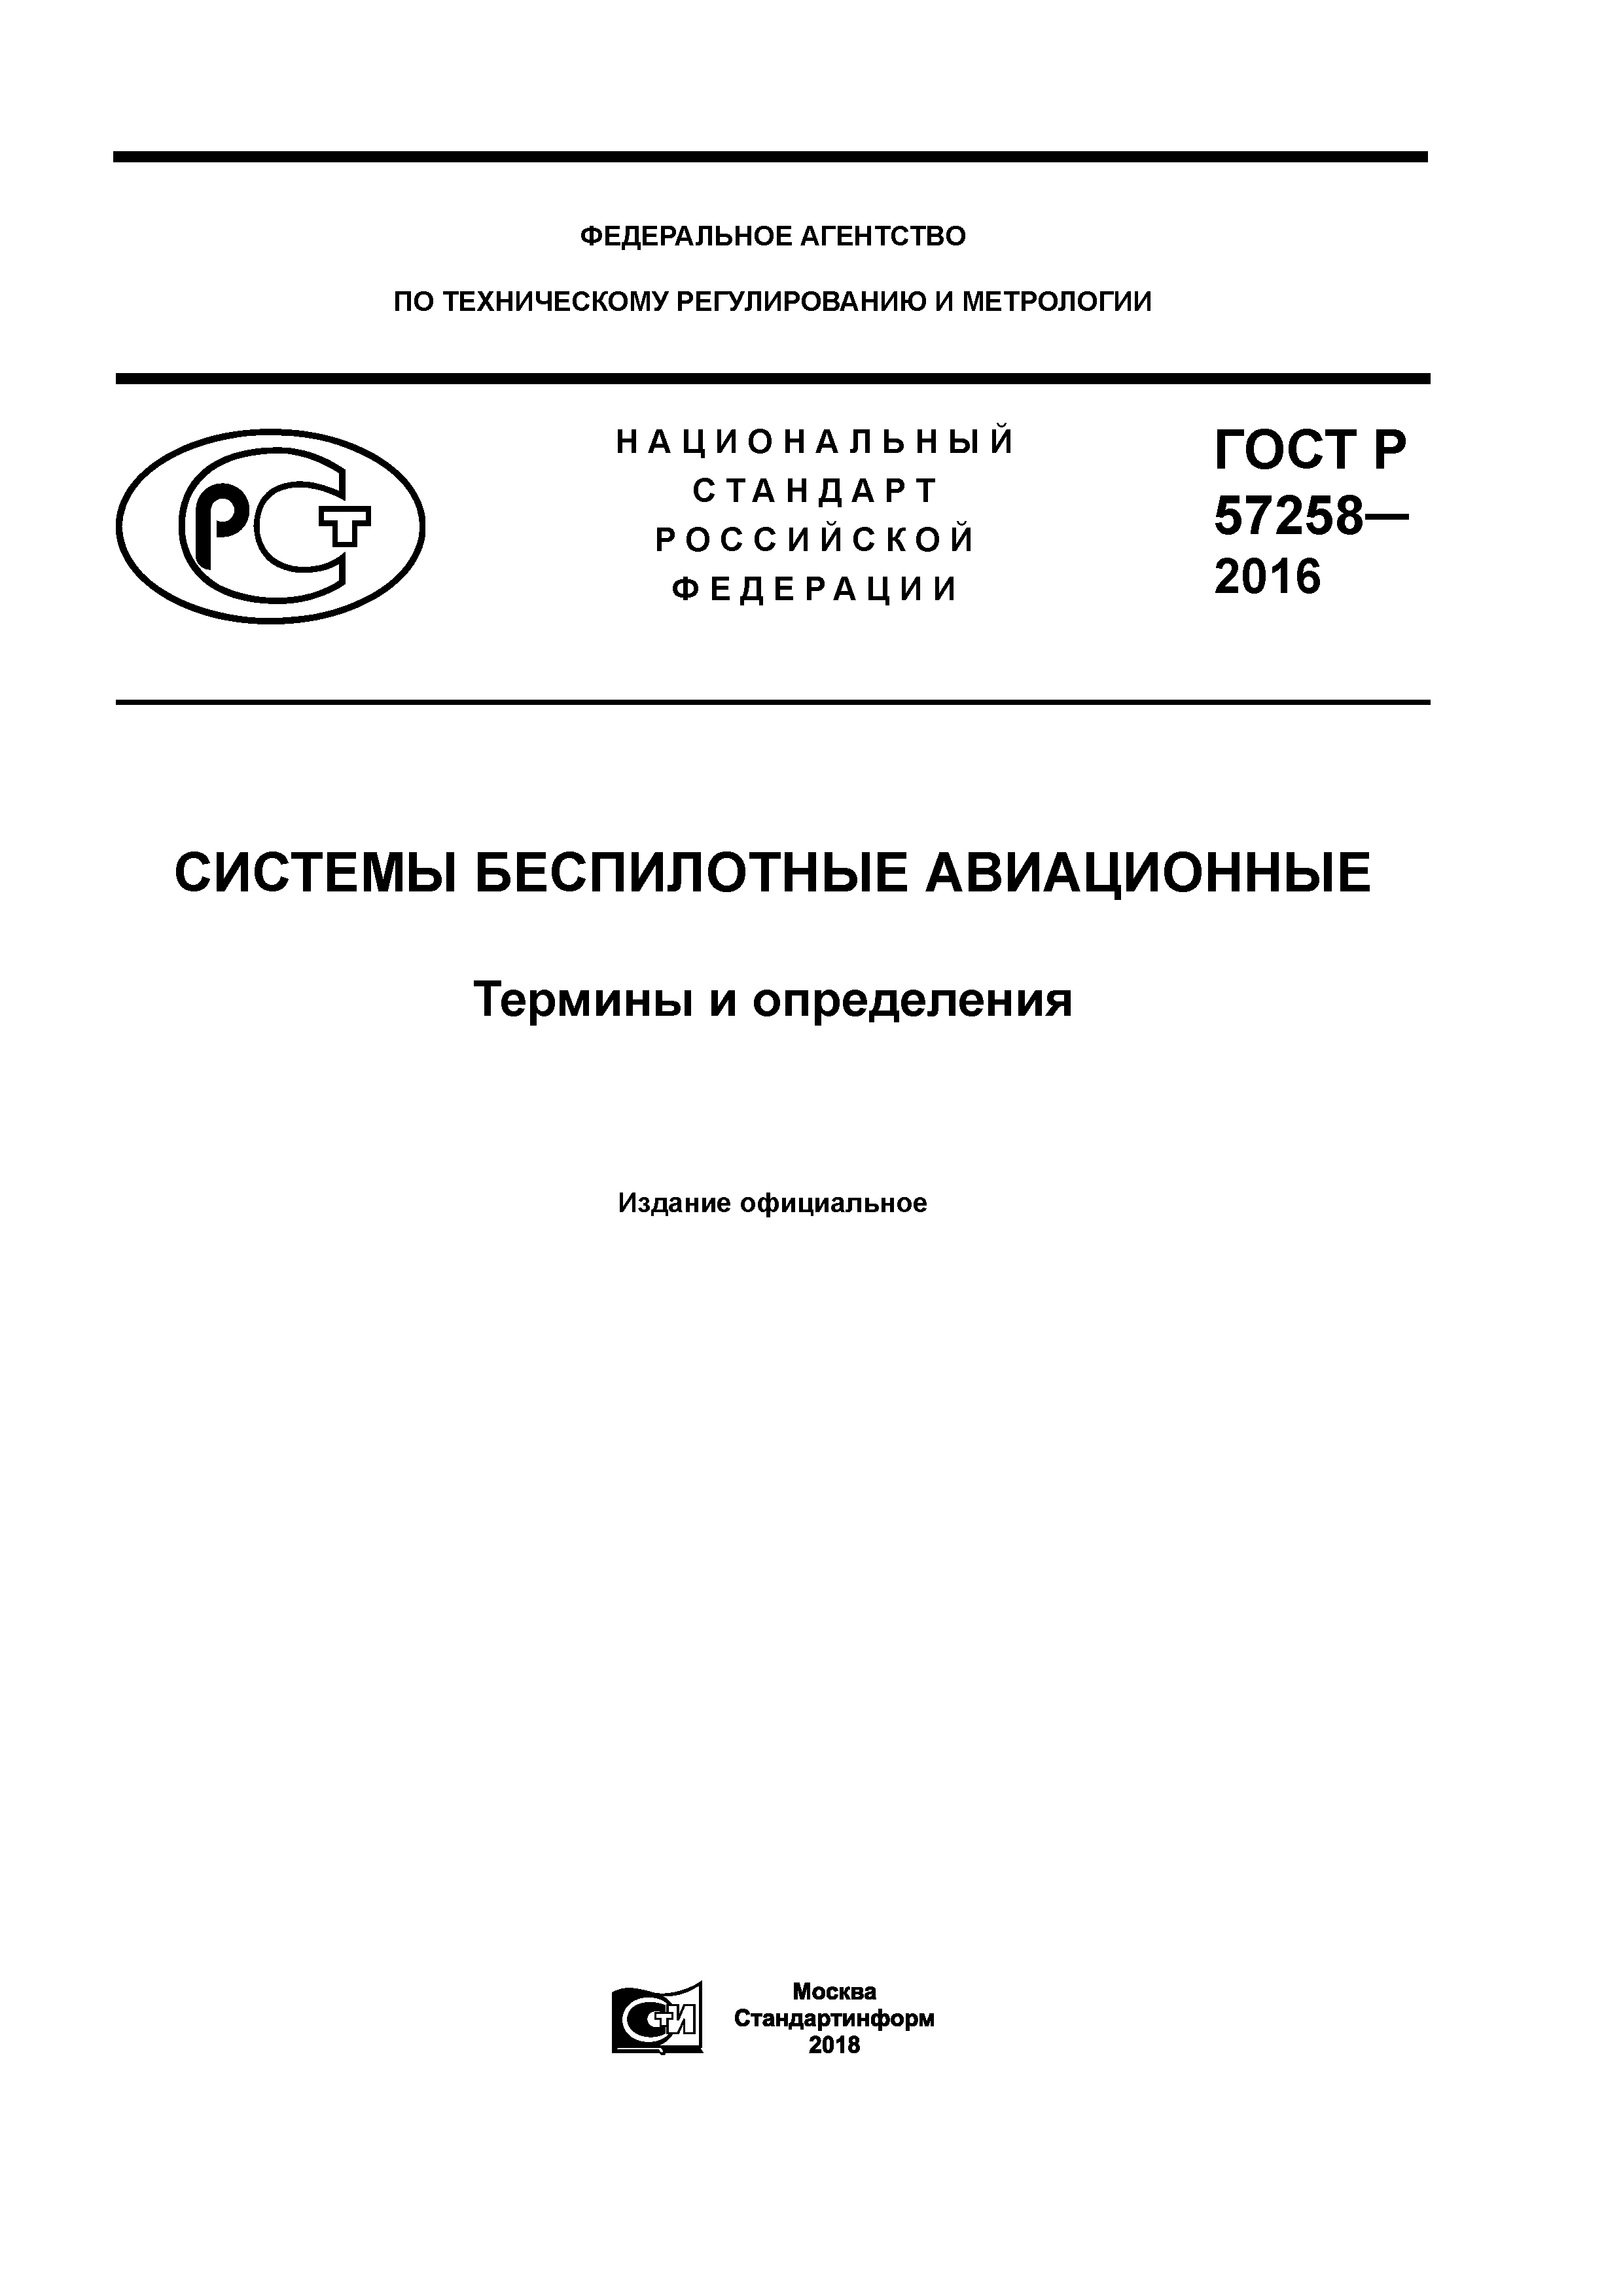 ГОСТ Р 57258-2016